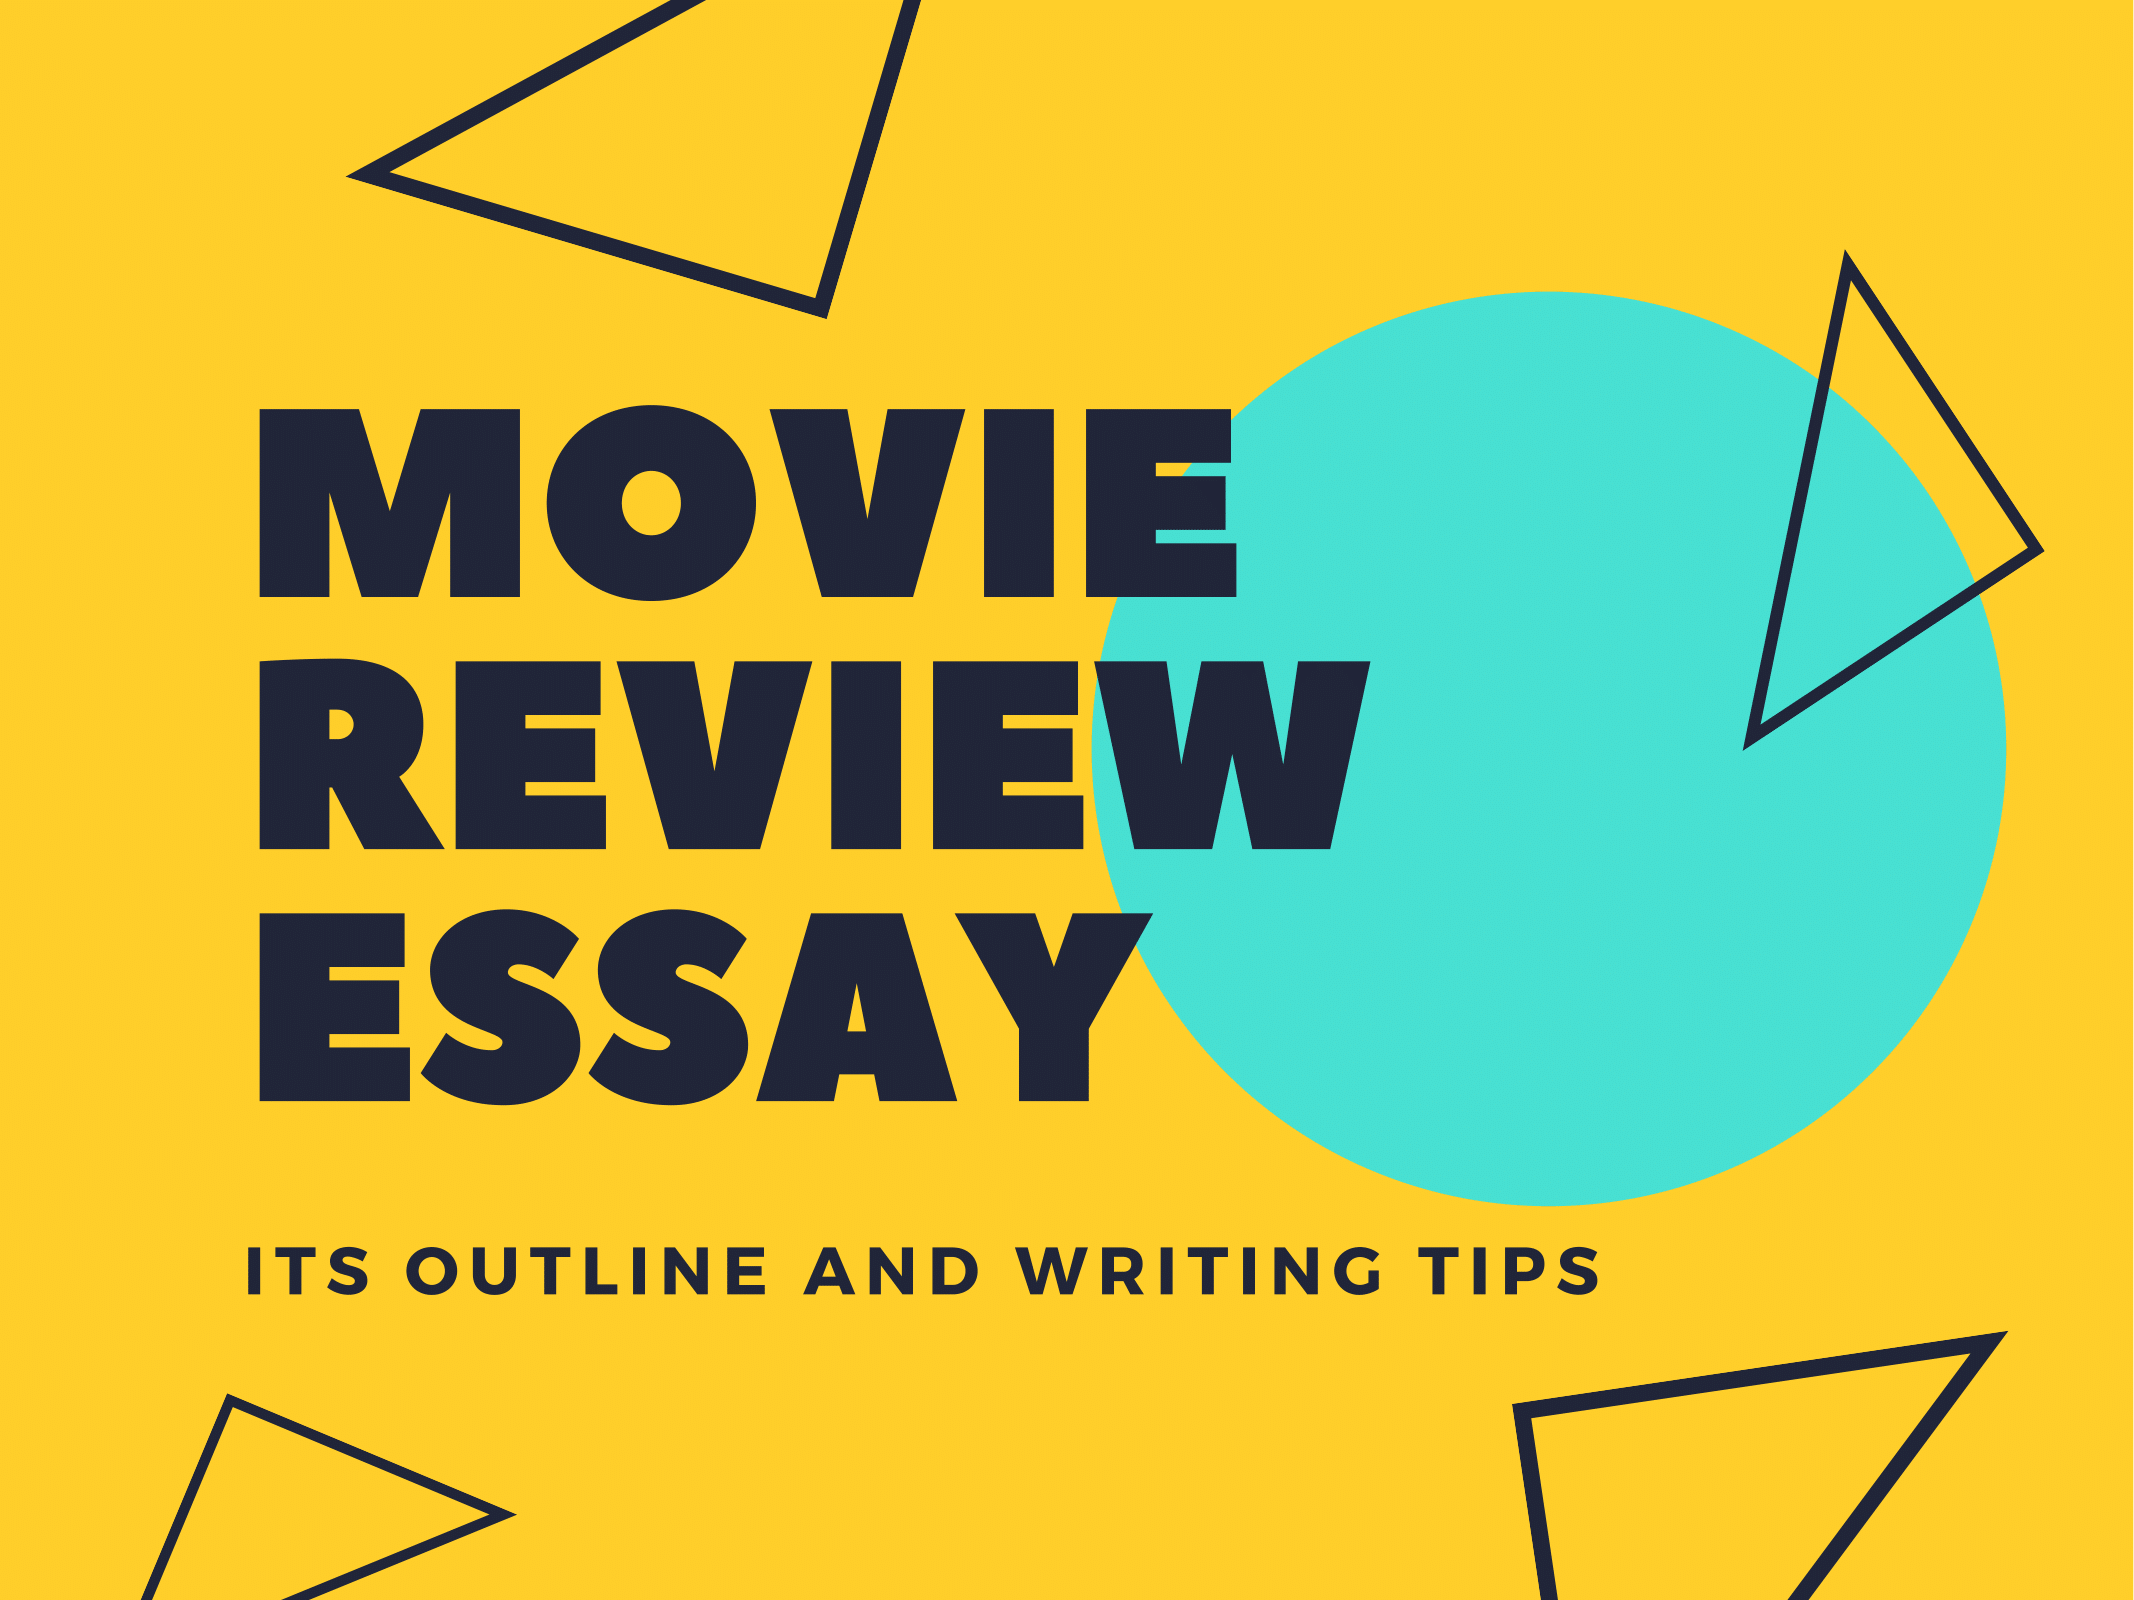 Movie Review Essay Guide Slide 1